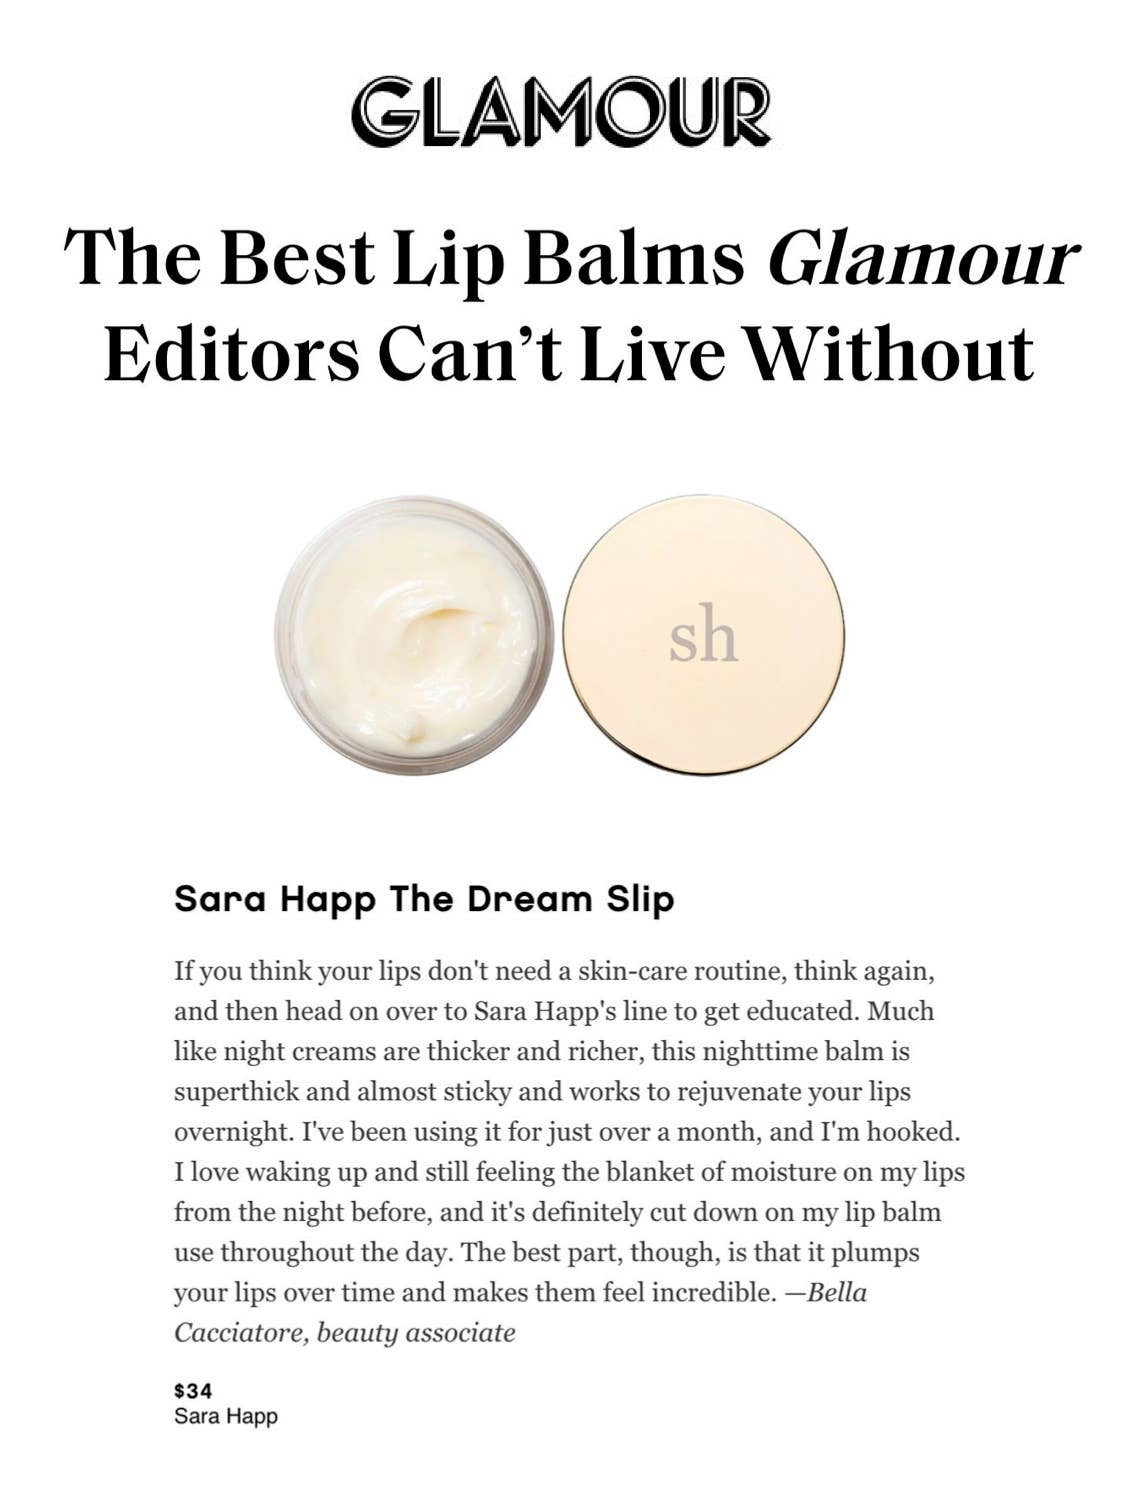 The Dream Slip® Overnight Lip Mask